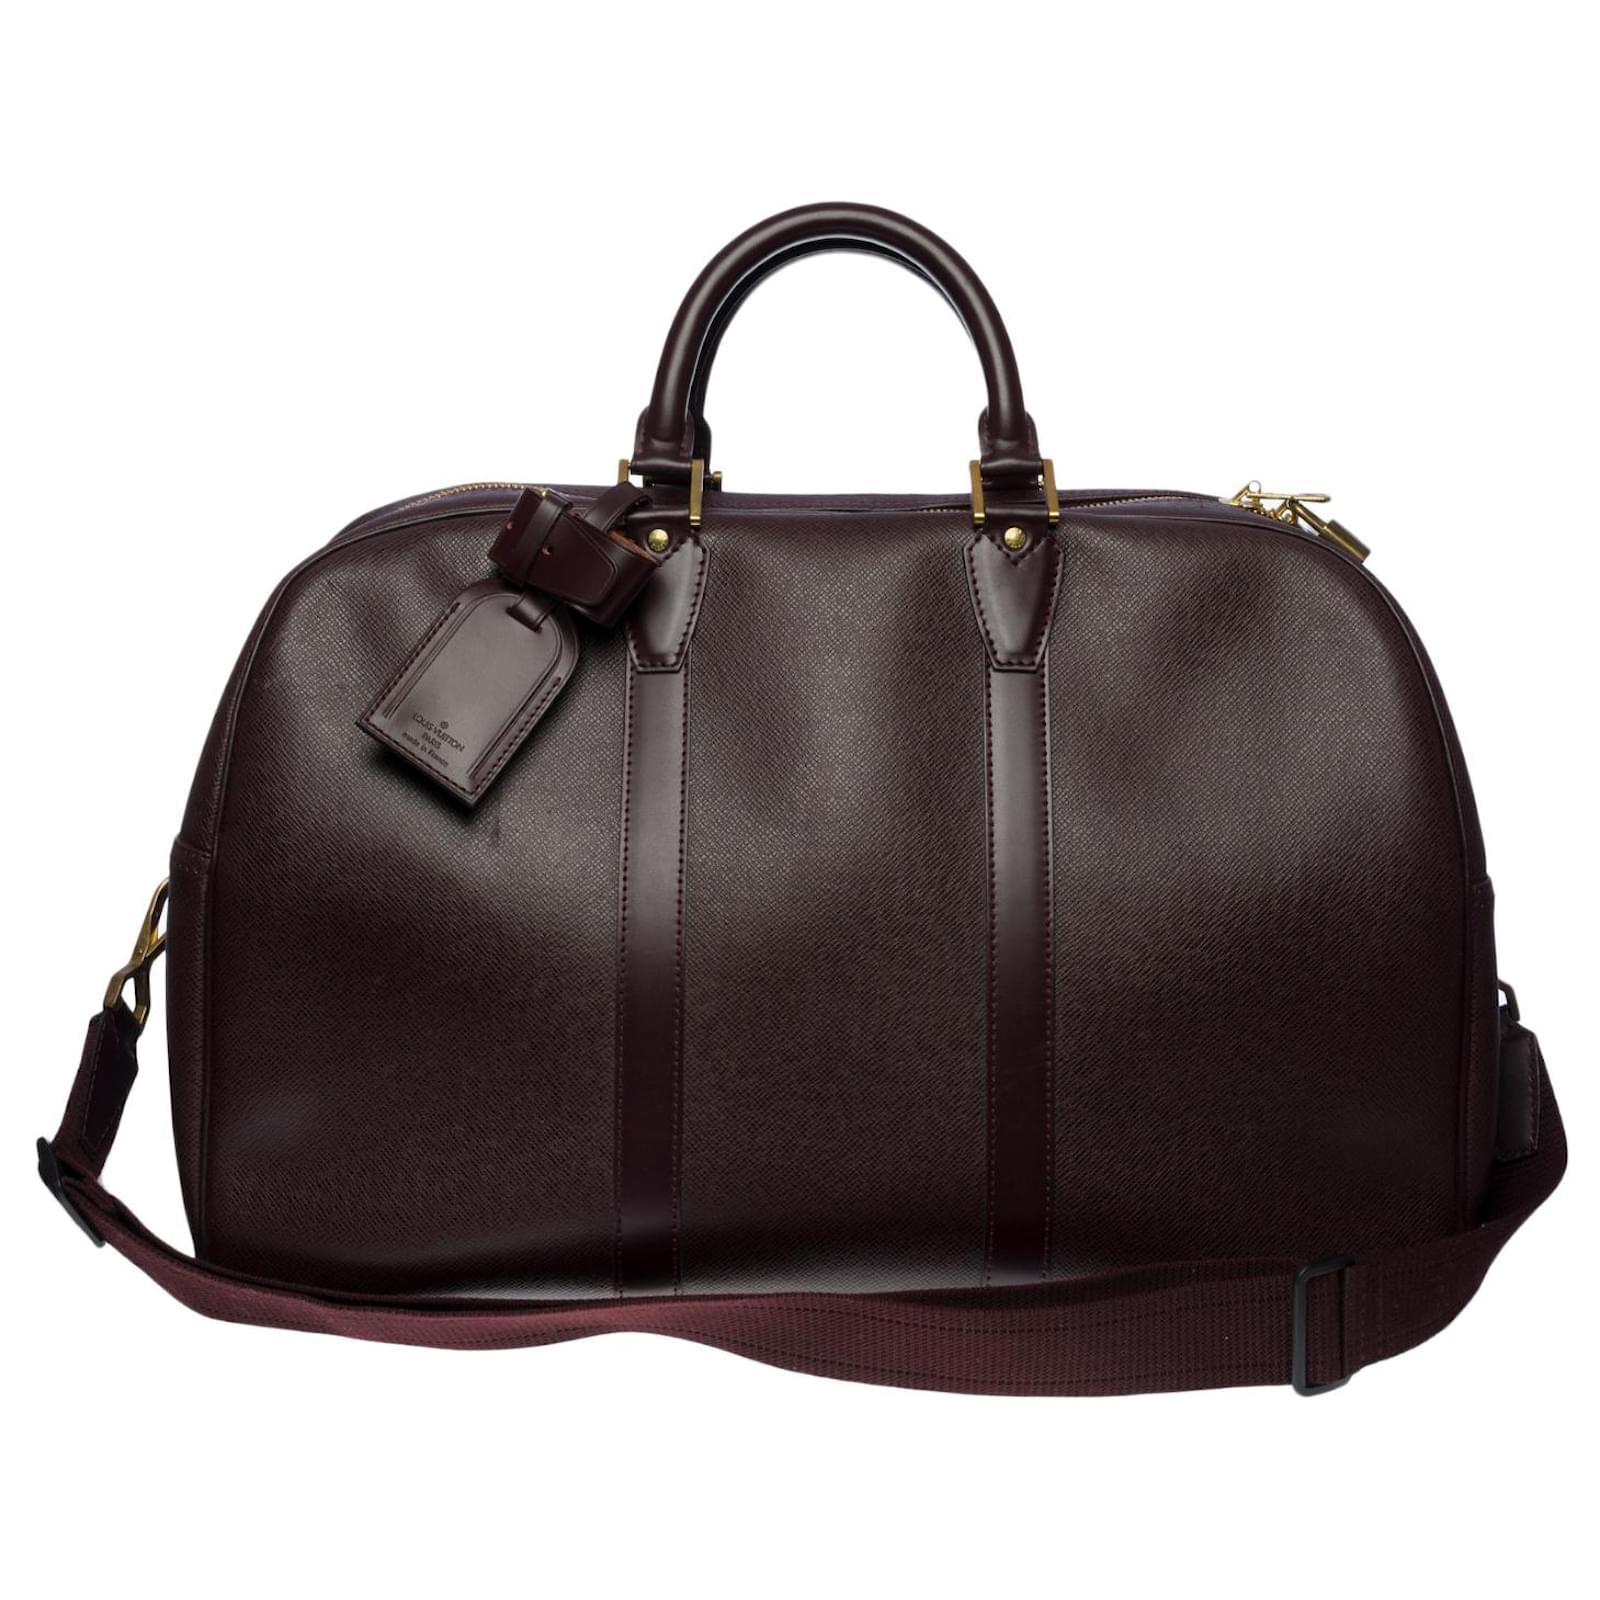 Very beautiful Louis Vuitton Kendall travel bag in burgundy